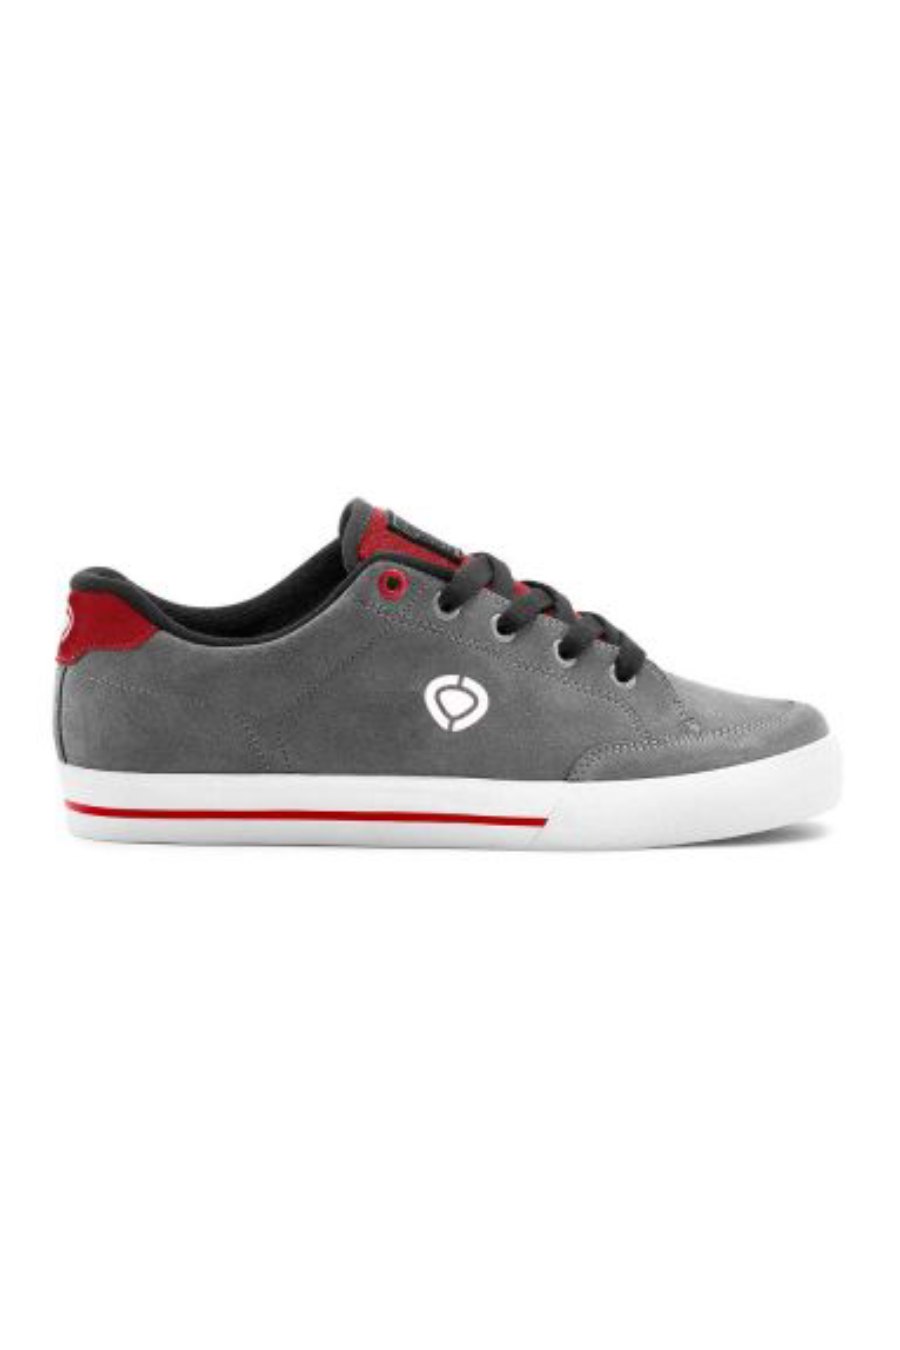 CIRCA Sneakers AL50 SLIM CHARCOAL GREY/POMPEIAN RED/WHITE - GREY-C1RCA000013215-123-GREY 22434